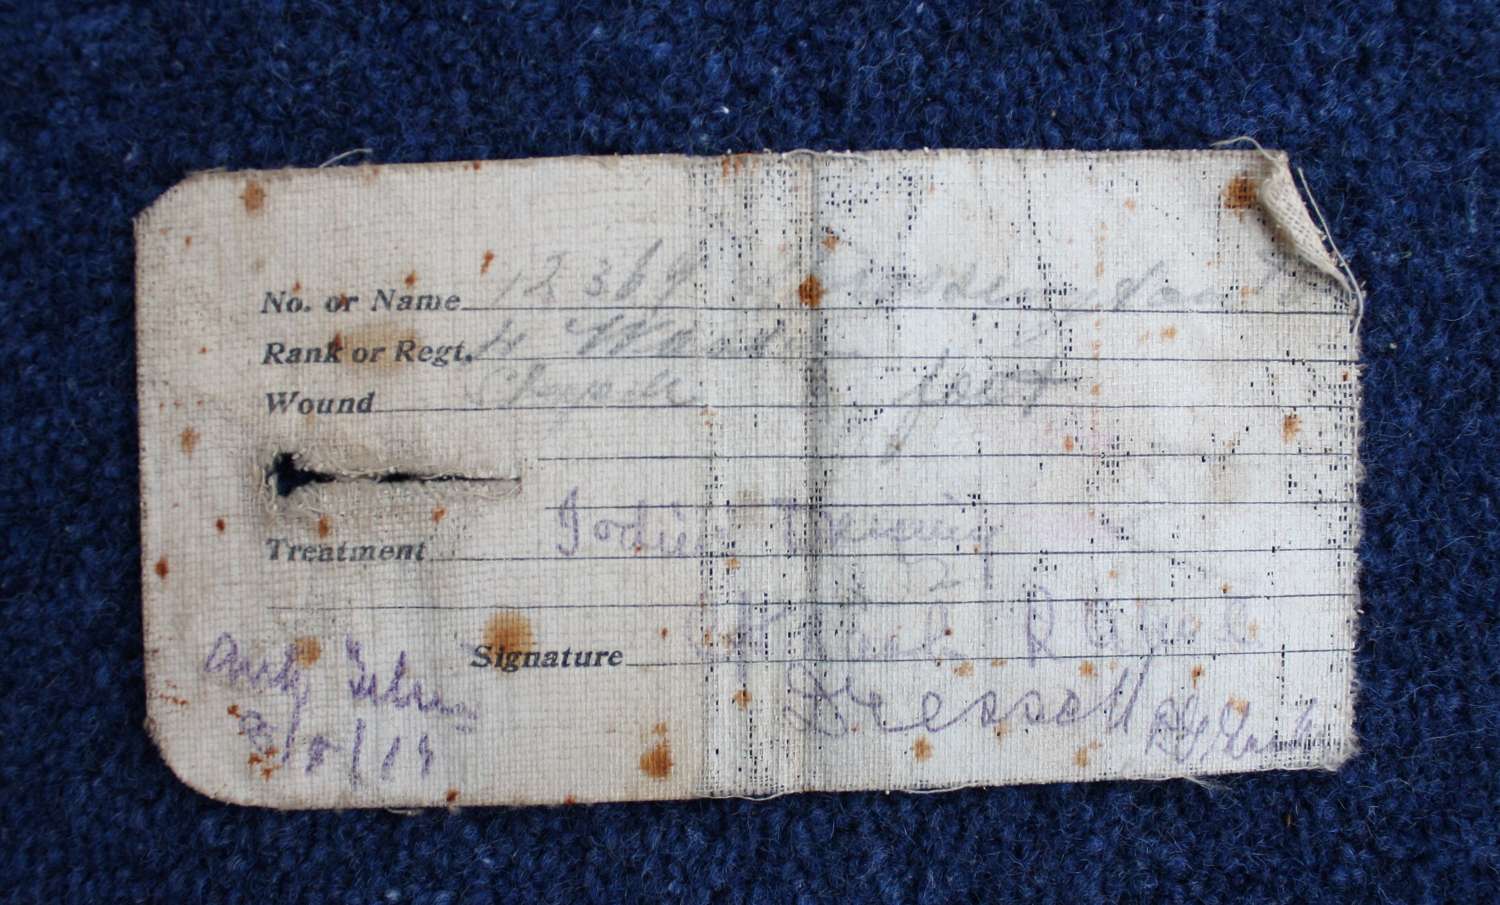 Rare WW1 British Army Wound Card attached to Uniform.